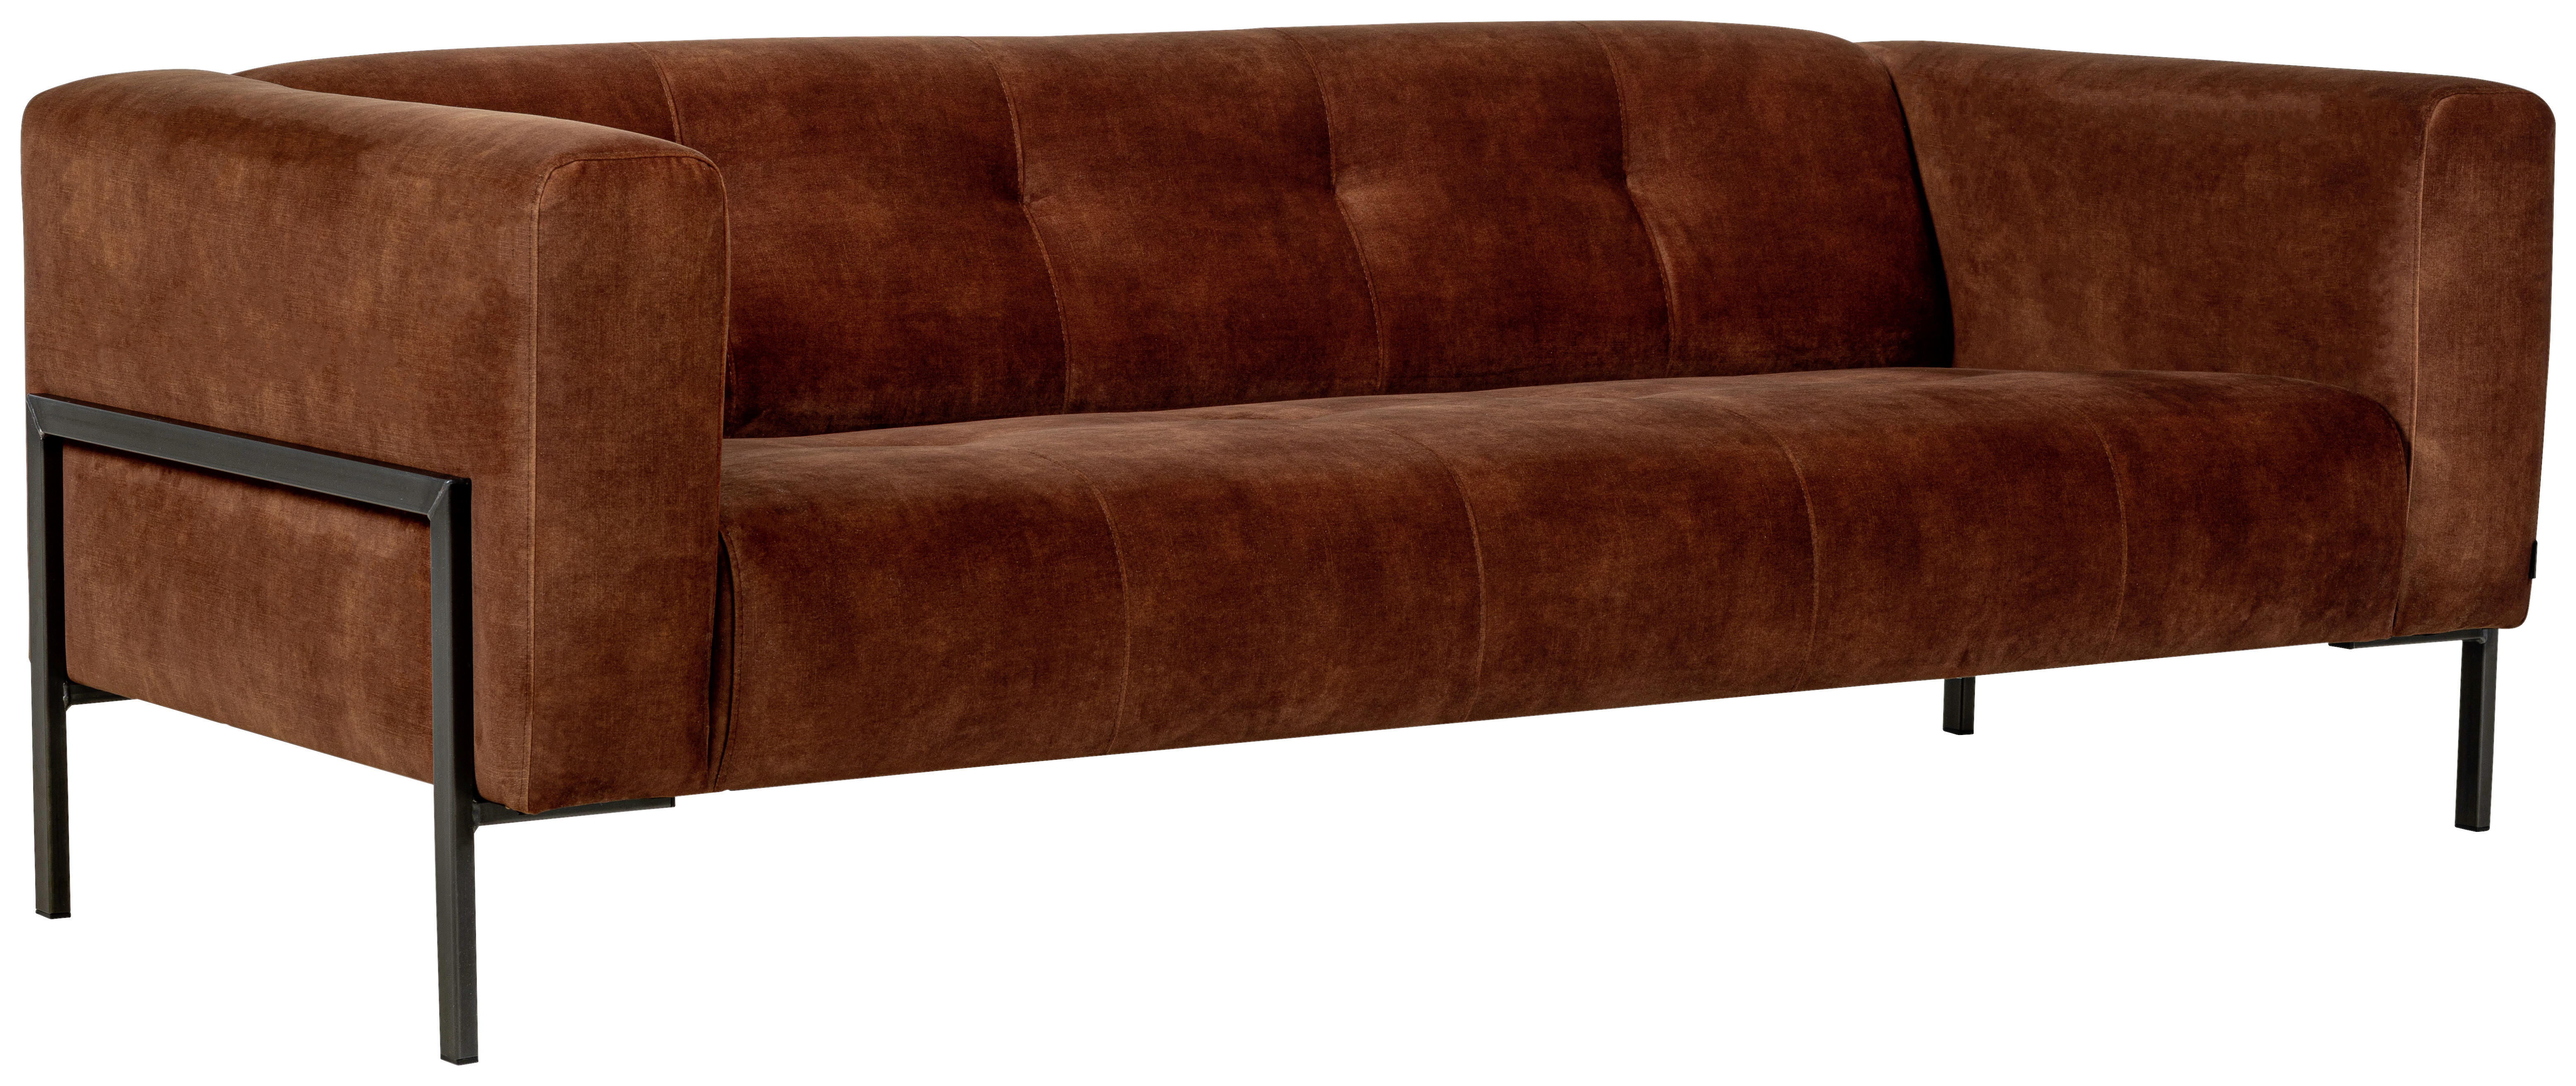 SOFFA i trä, textil kopparfärgad  - svart/kopparfärgad, Design, metall/trä (230/72/90cm) - Pure Home Comfort